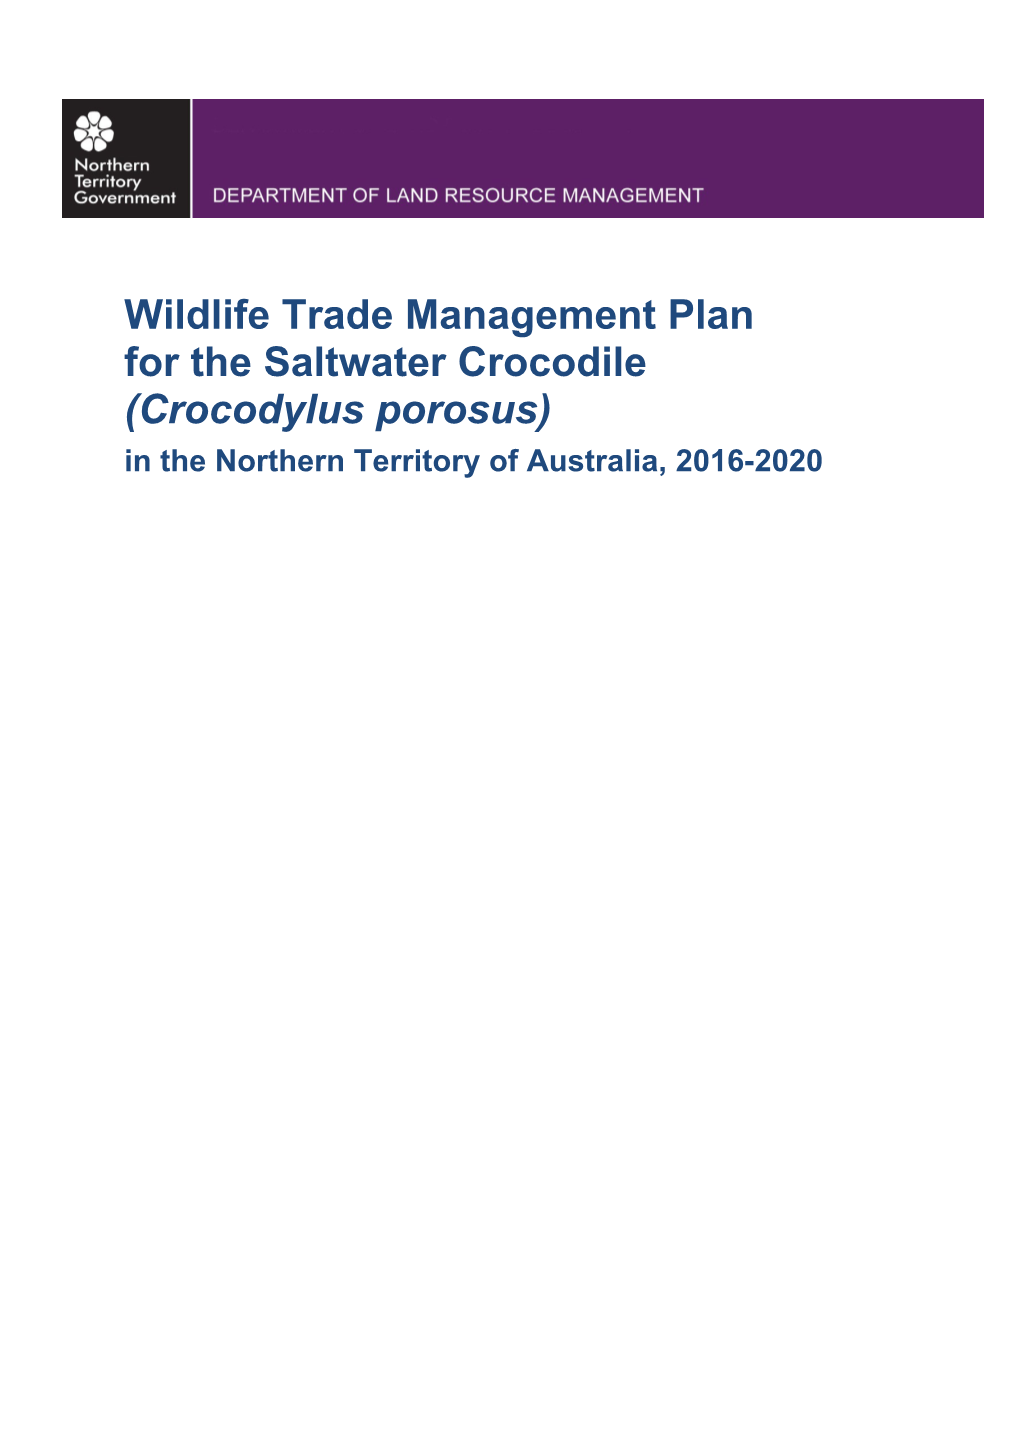 Wildlife Trade Management Plan for the Saltwater Crocodile (Crocodylus Porosus)In the Northern